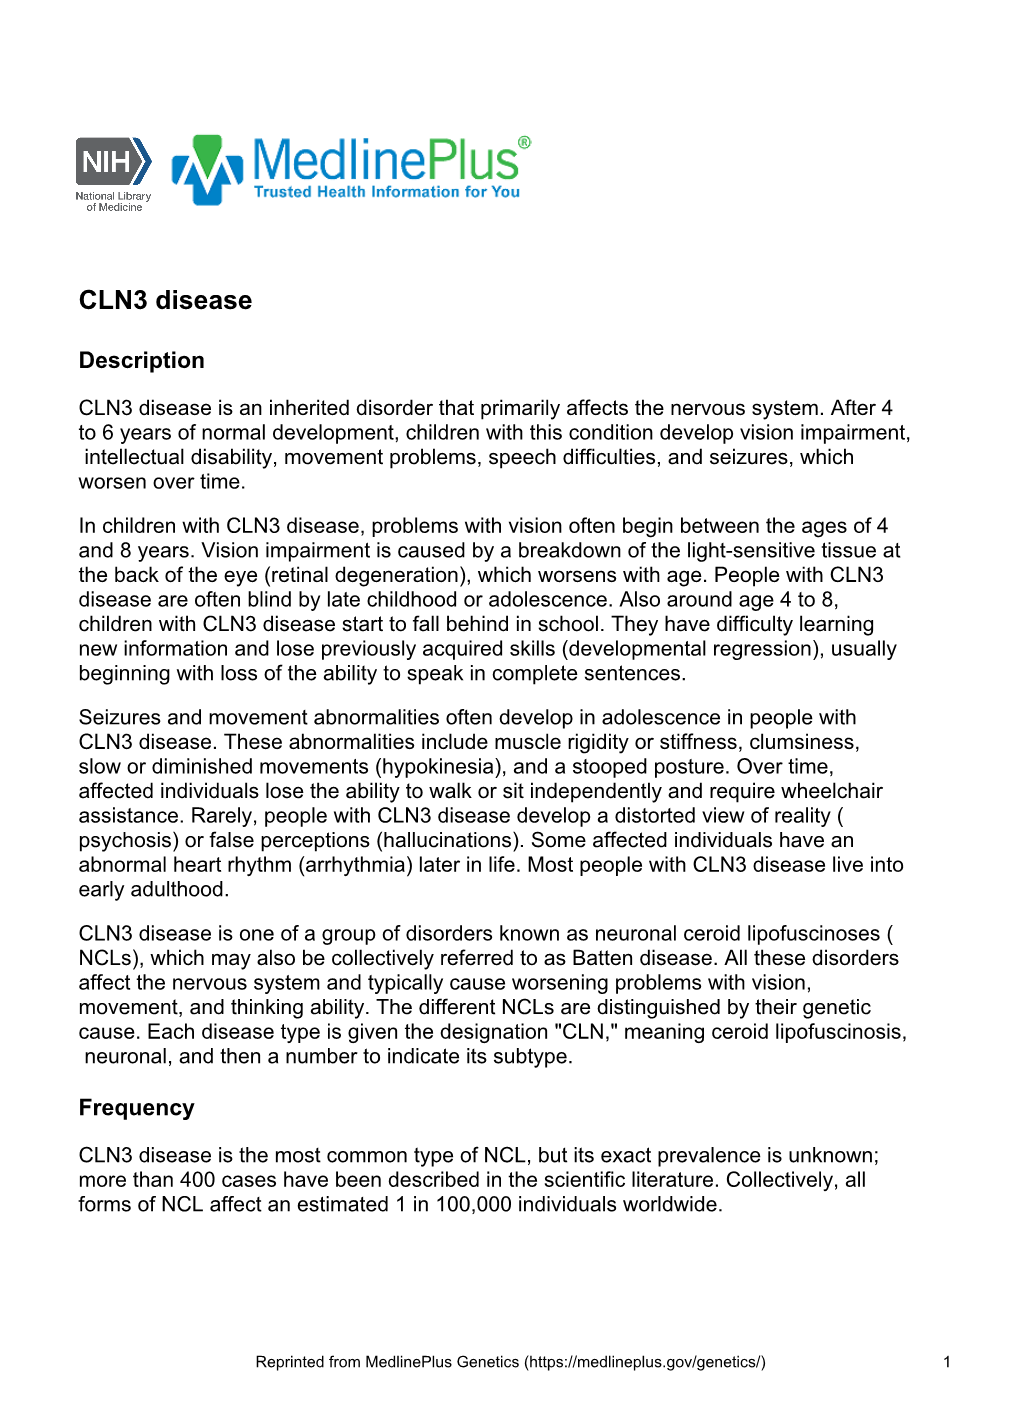 CLN3 Disease